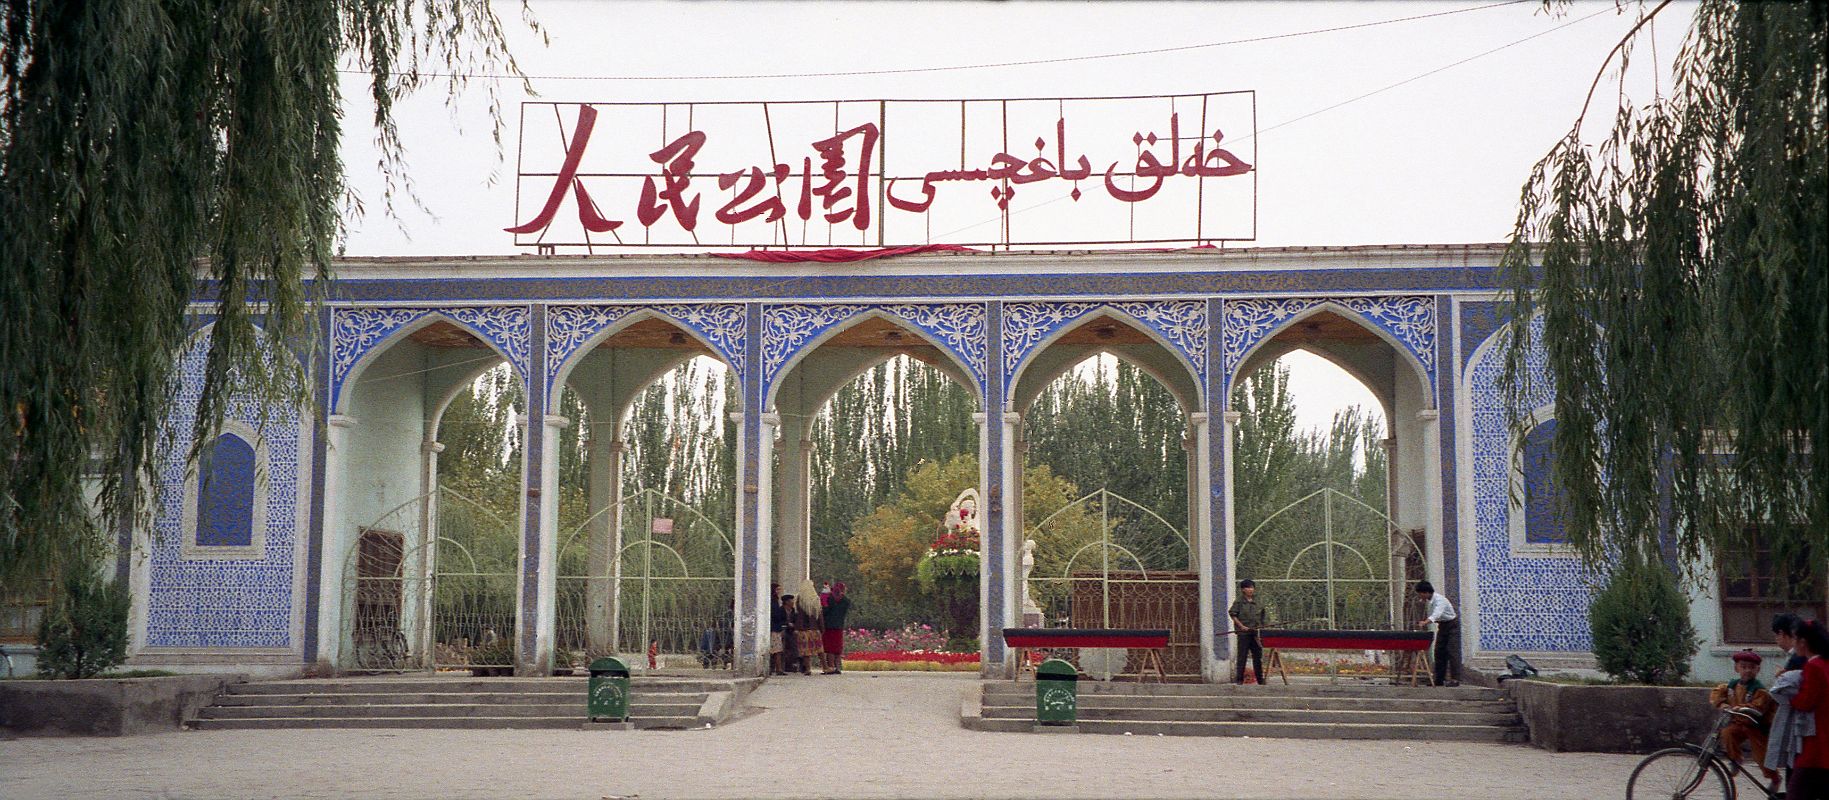 02 Kashgar Entrance to Peoples Park In 1993